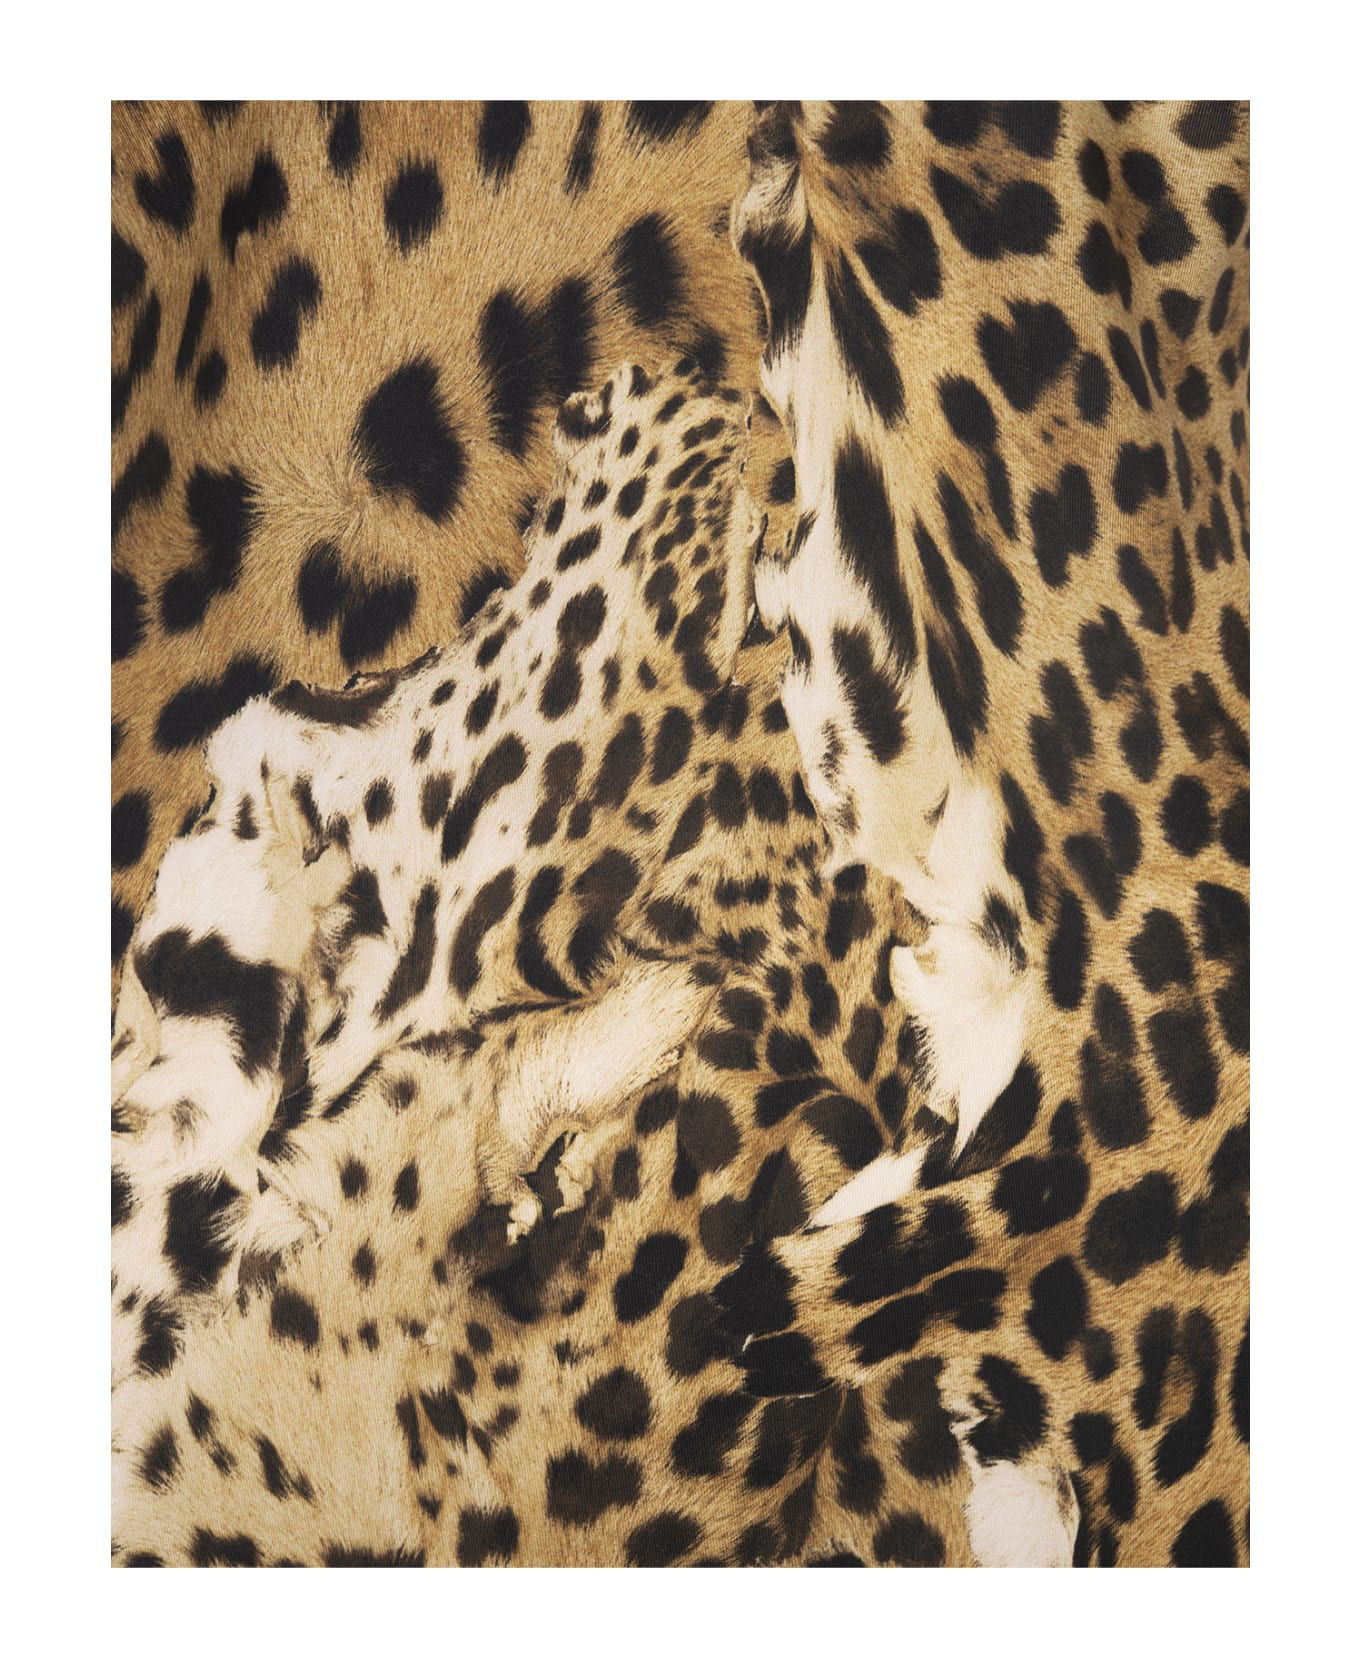 Roberto Cavalli Lingerie Dress With Leopard Print - Brown